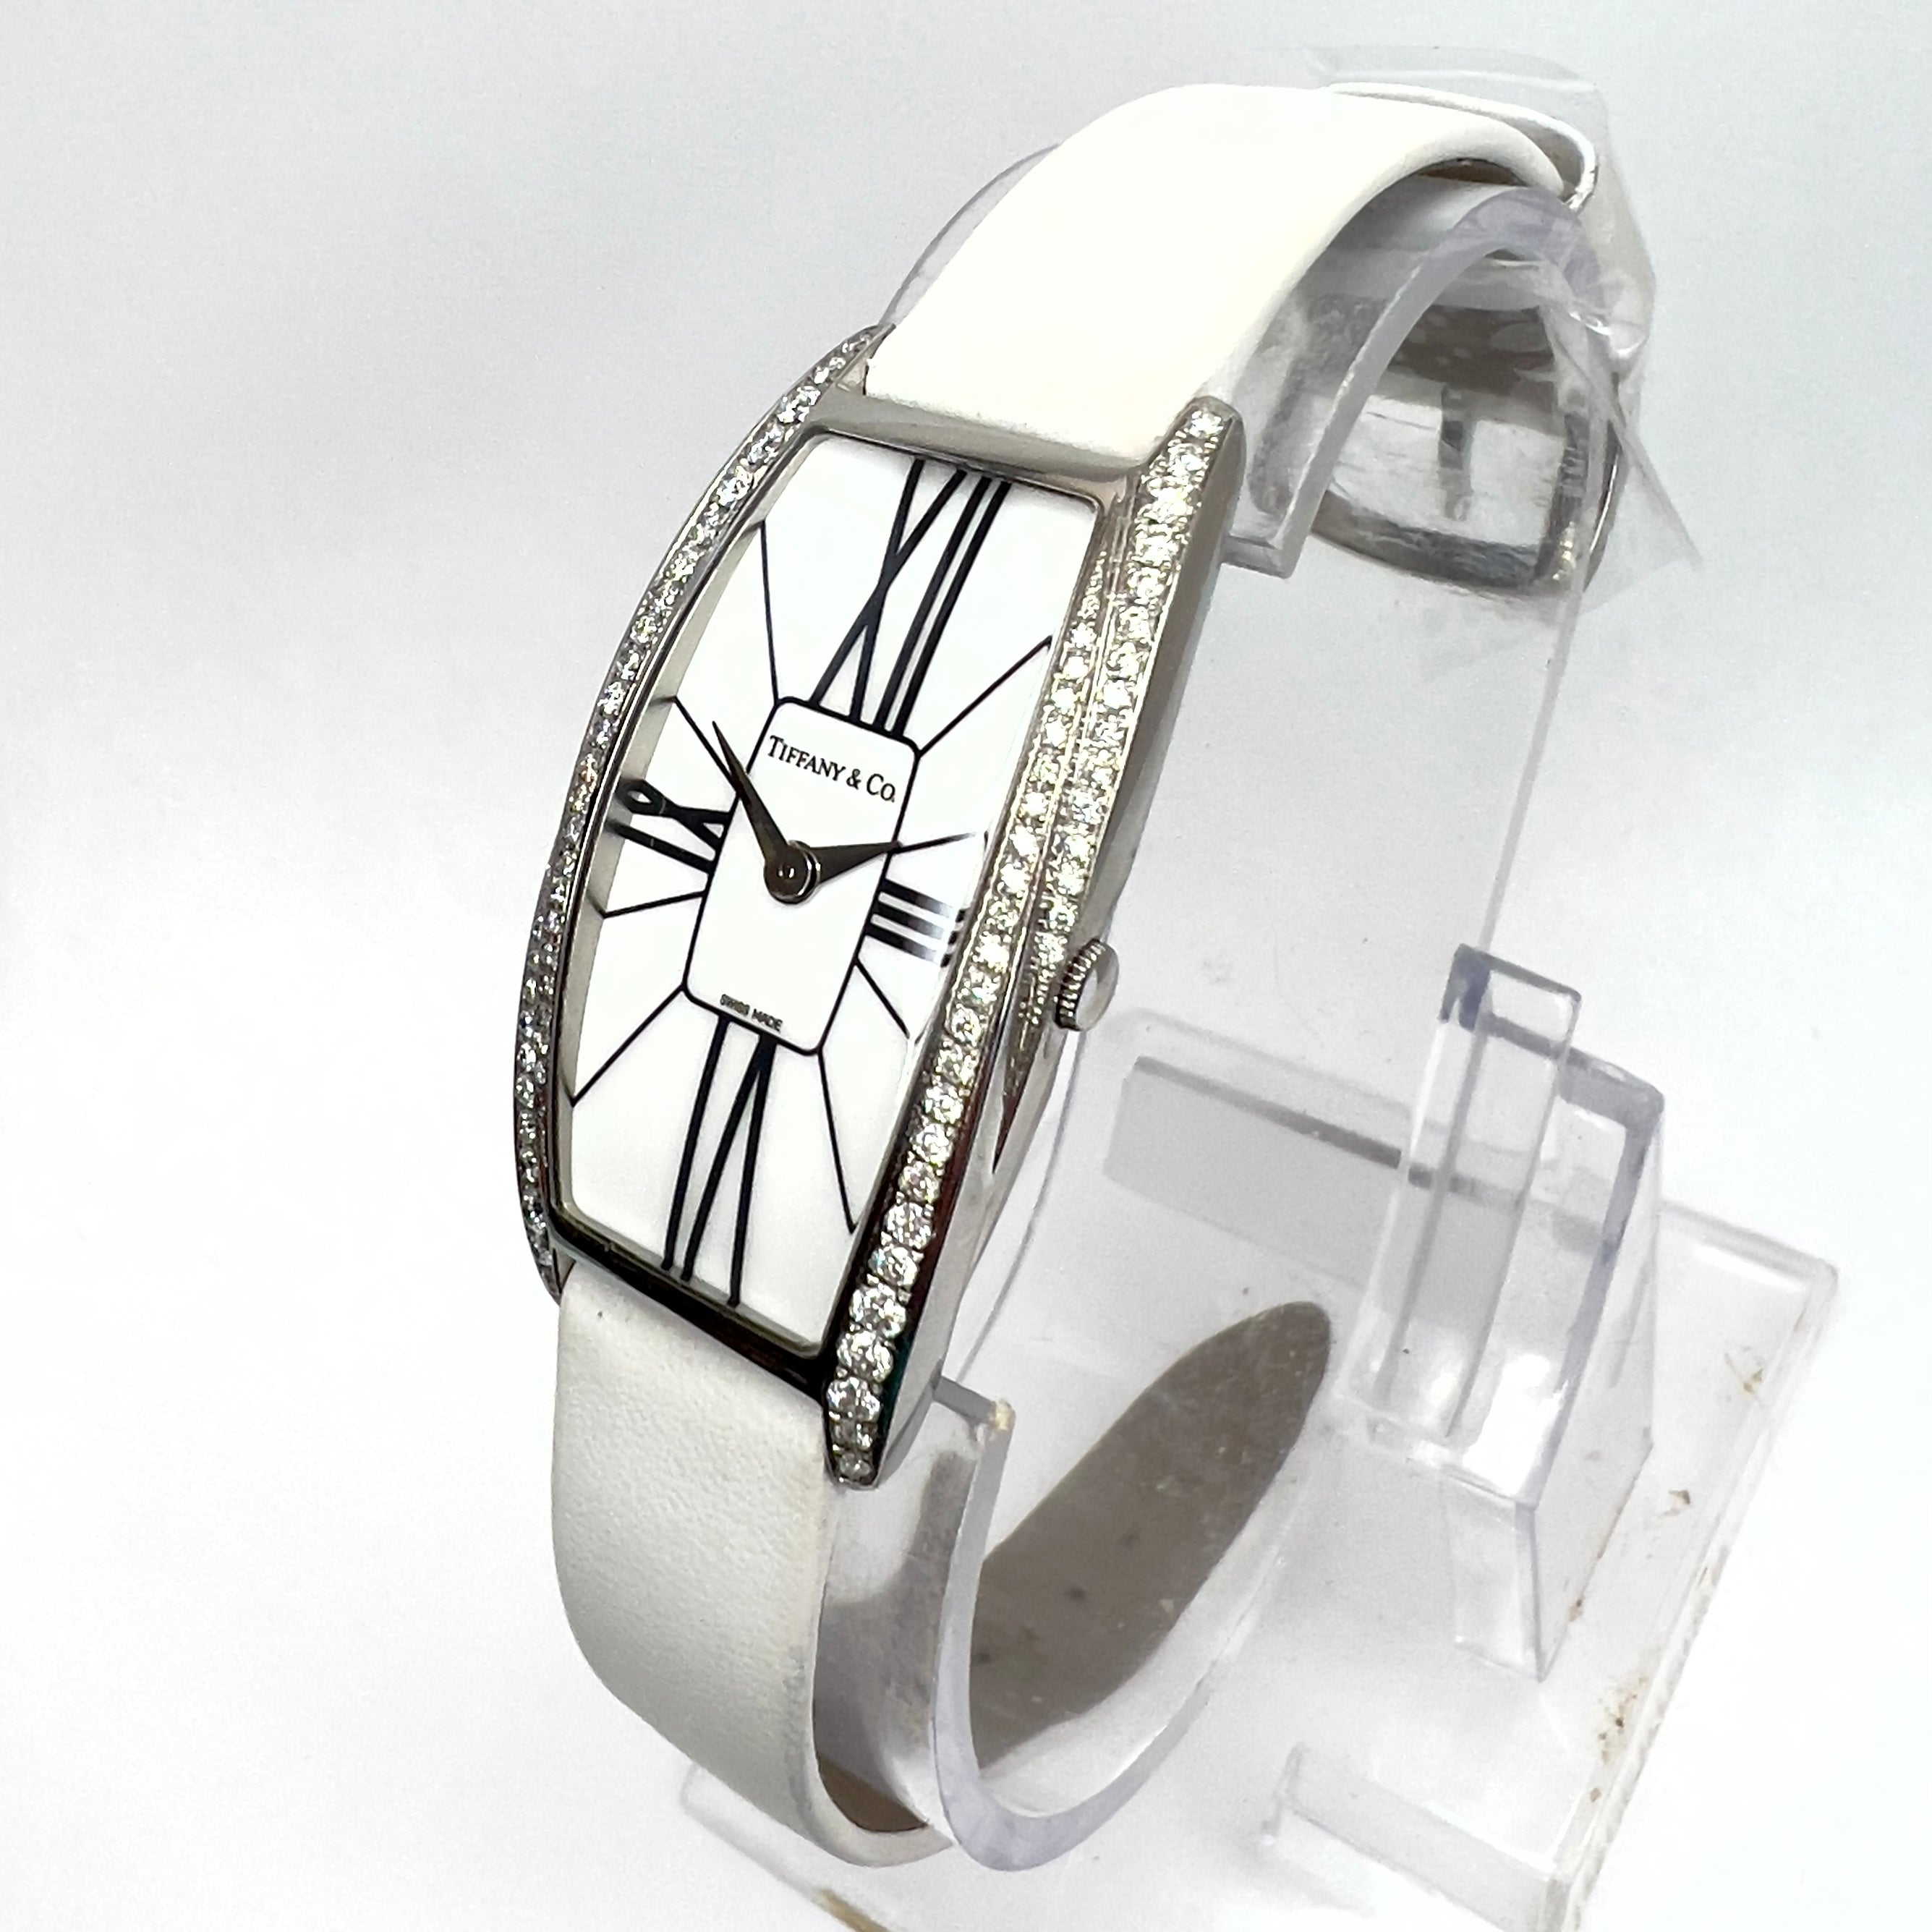 TIFFANY & CO. GEMEA Quartz 22mm Steel 0.57TCW Graduated DIAMOND Bezel Watch